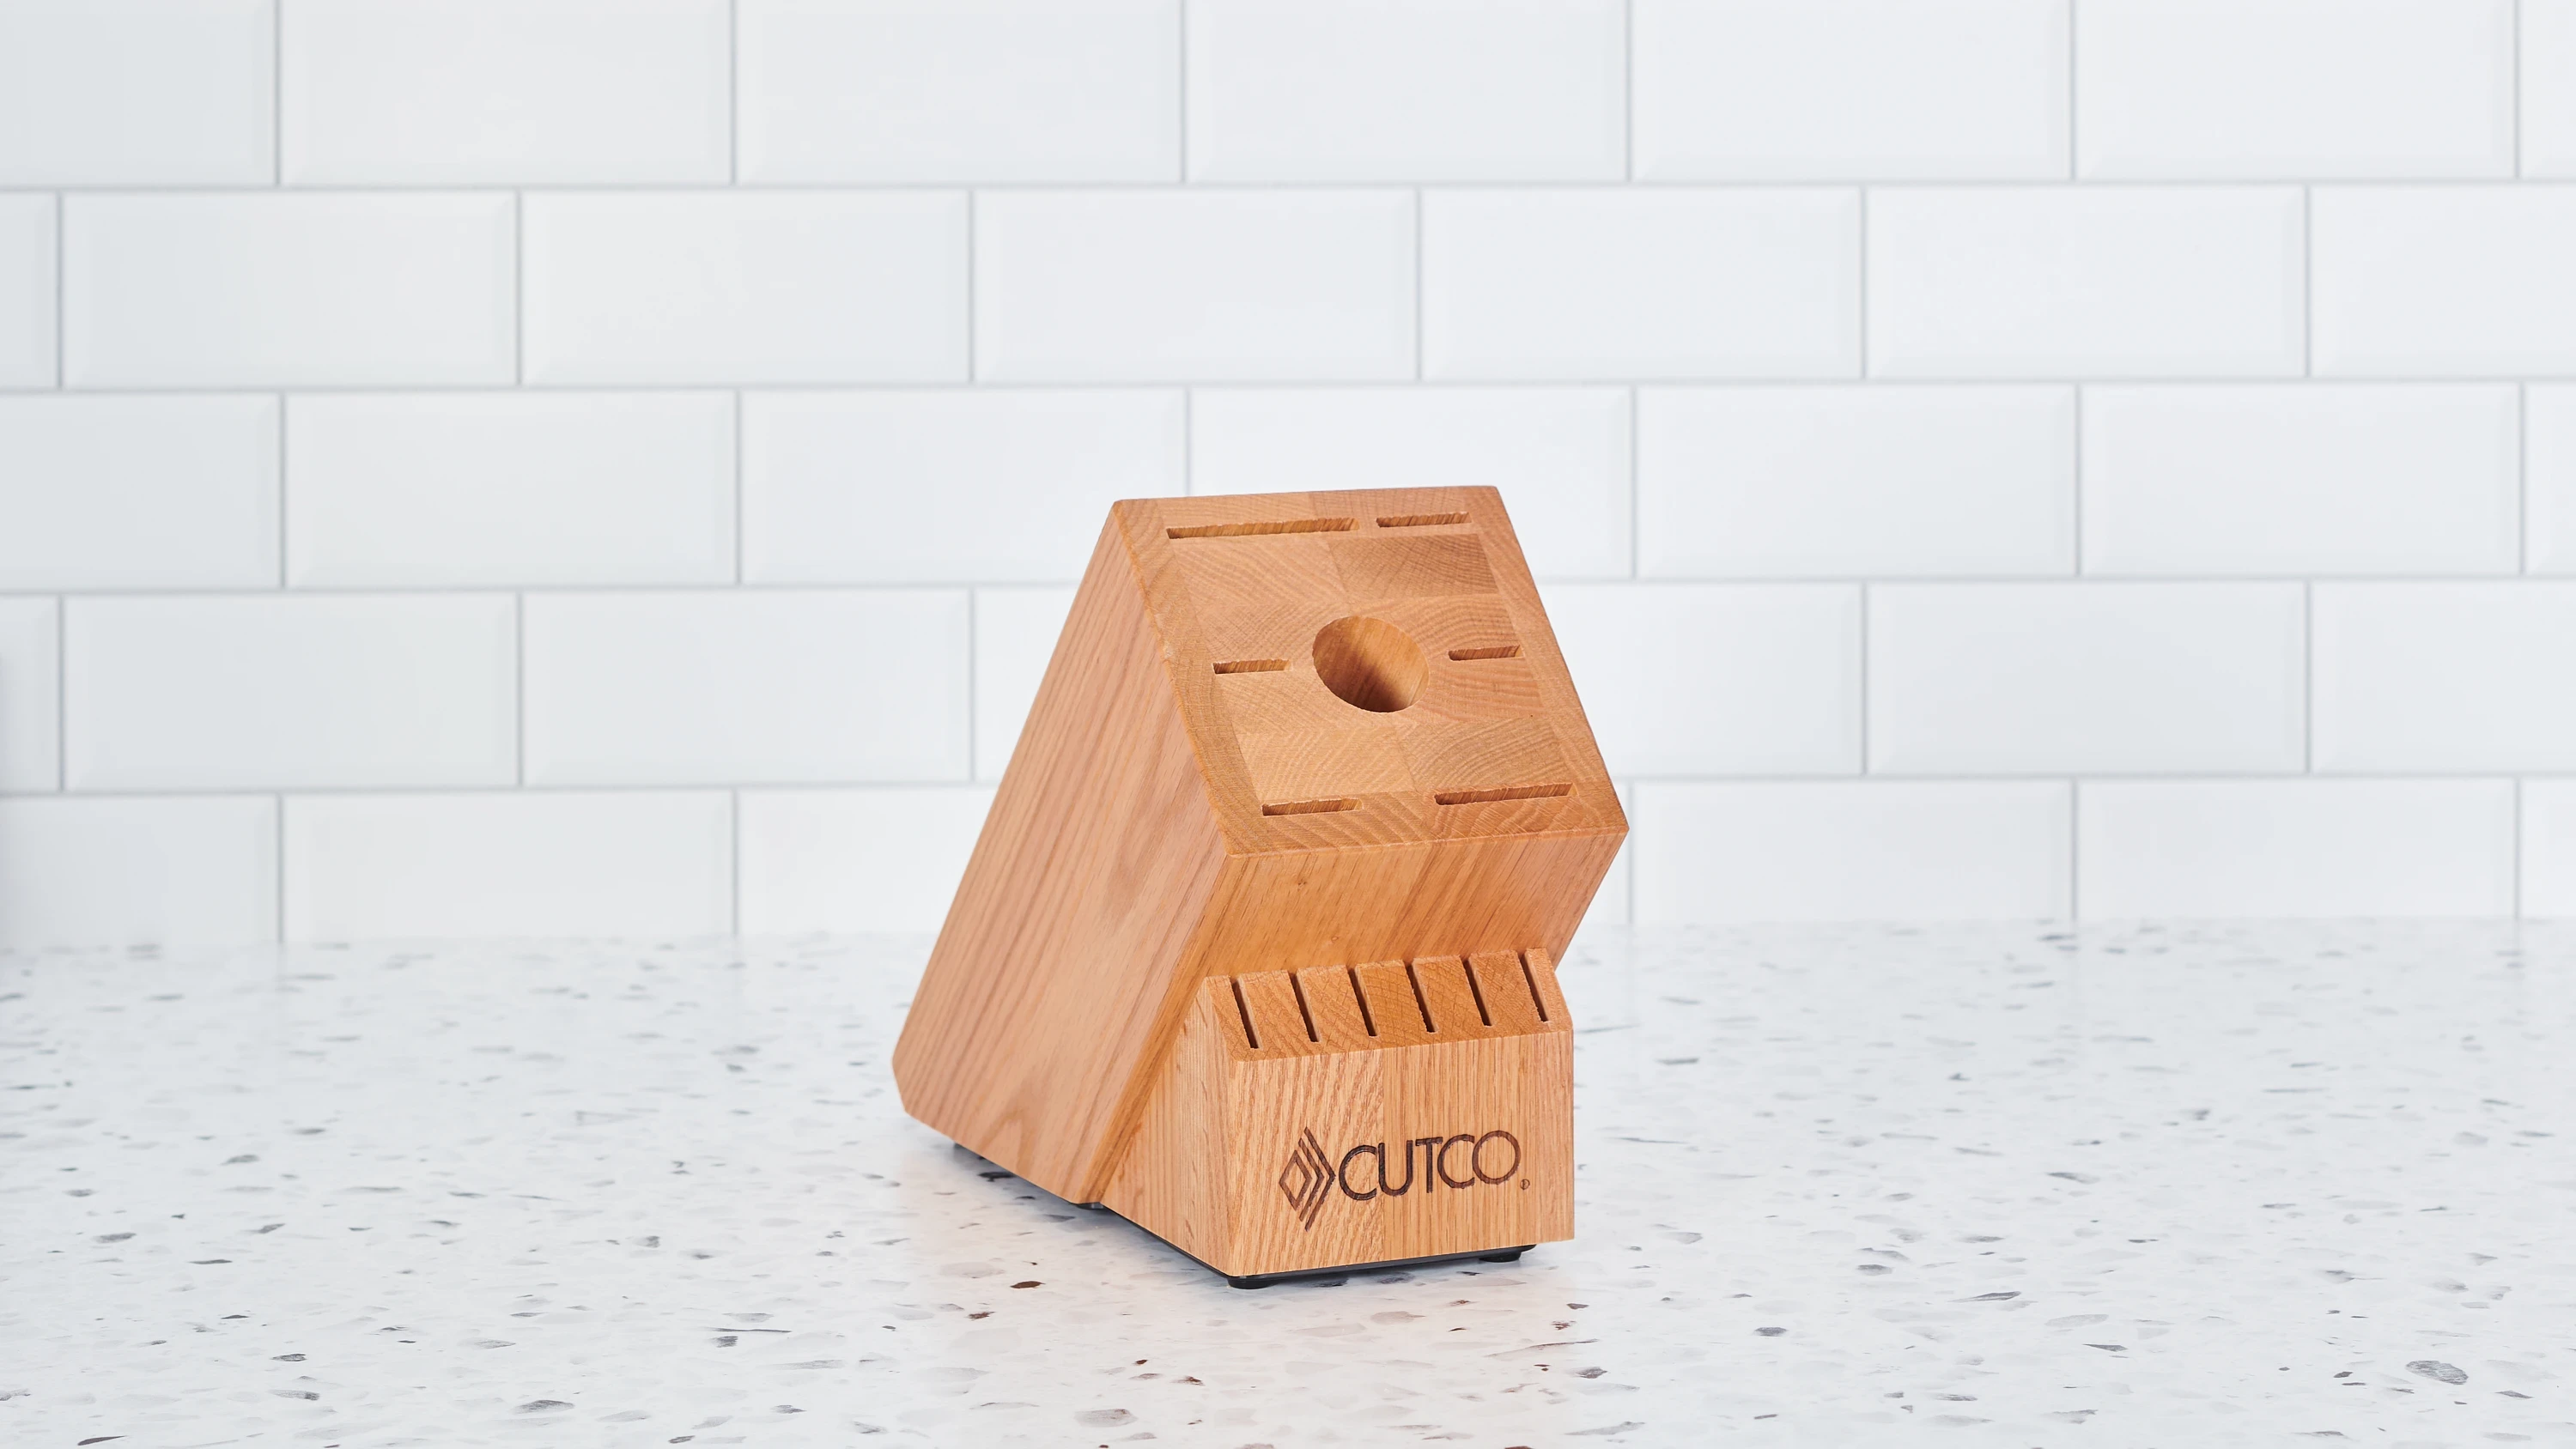 CUTCO Brand Knife Set in Wood Block: 13 Cutco Pieces Plus Wood